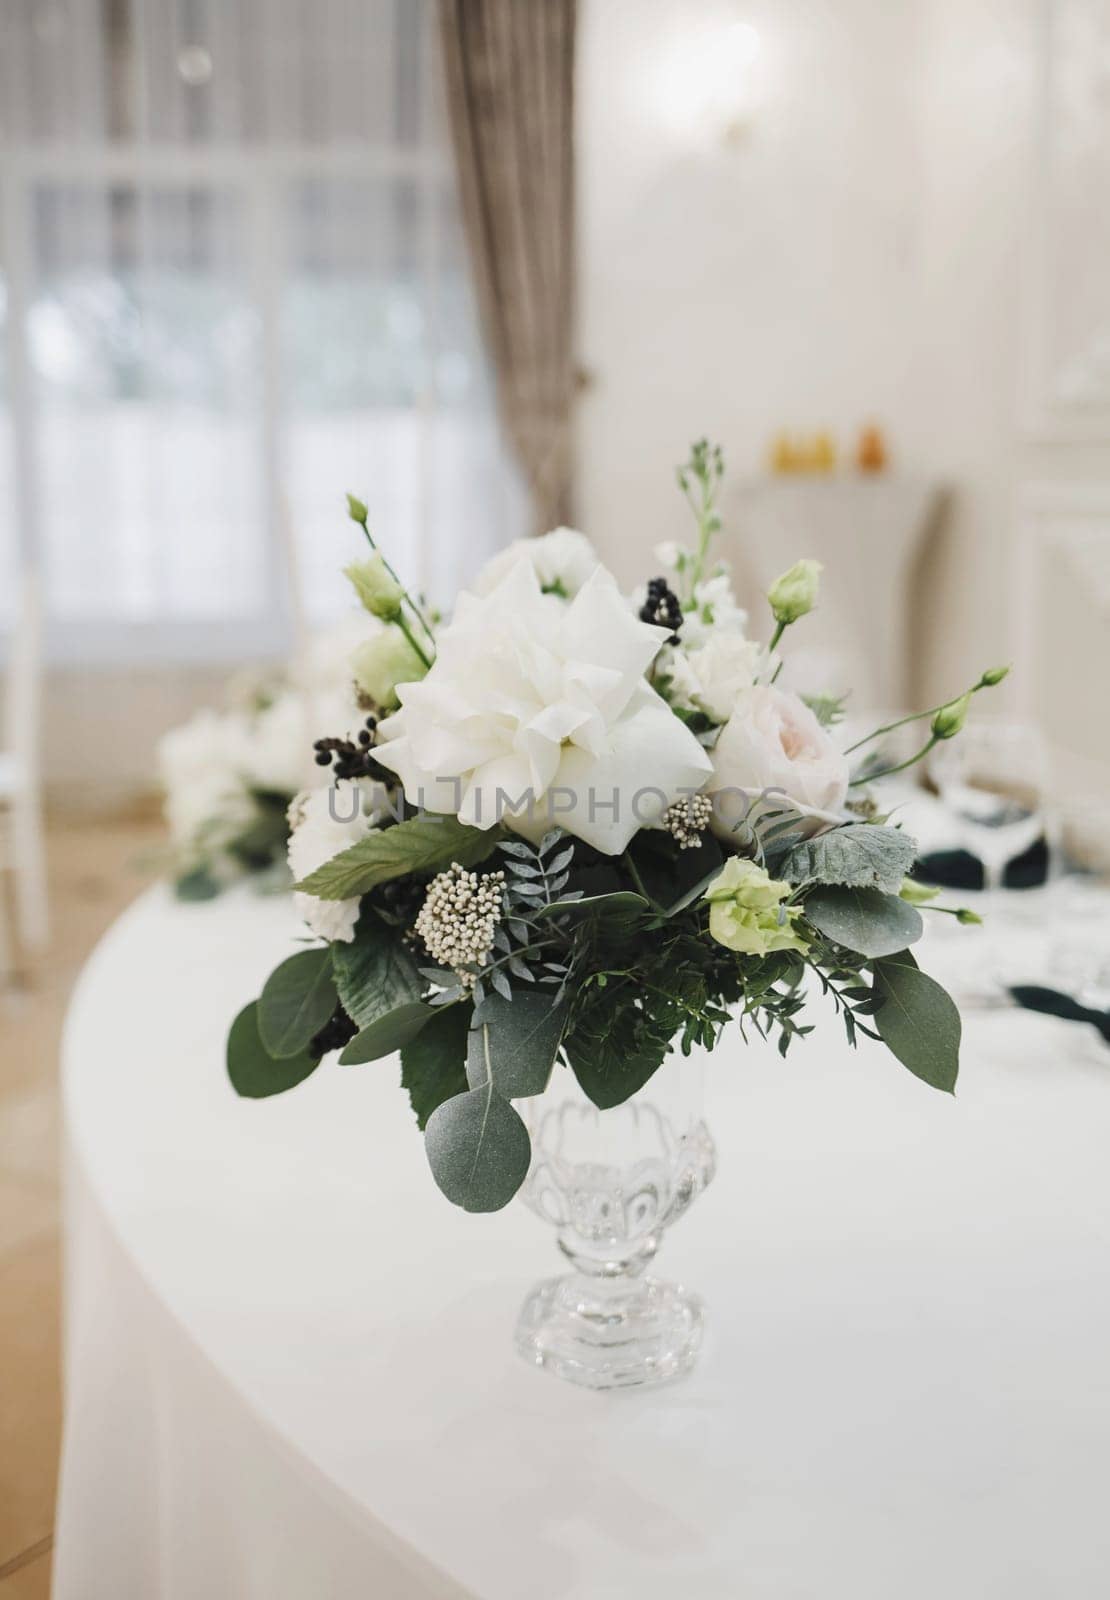 wedding decor, flowers. wedding reception table setting on wedding day